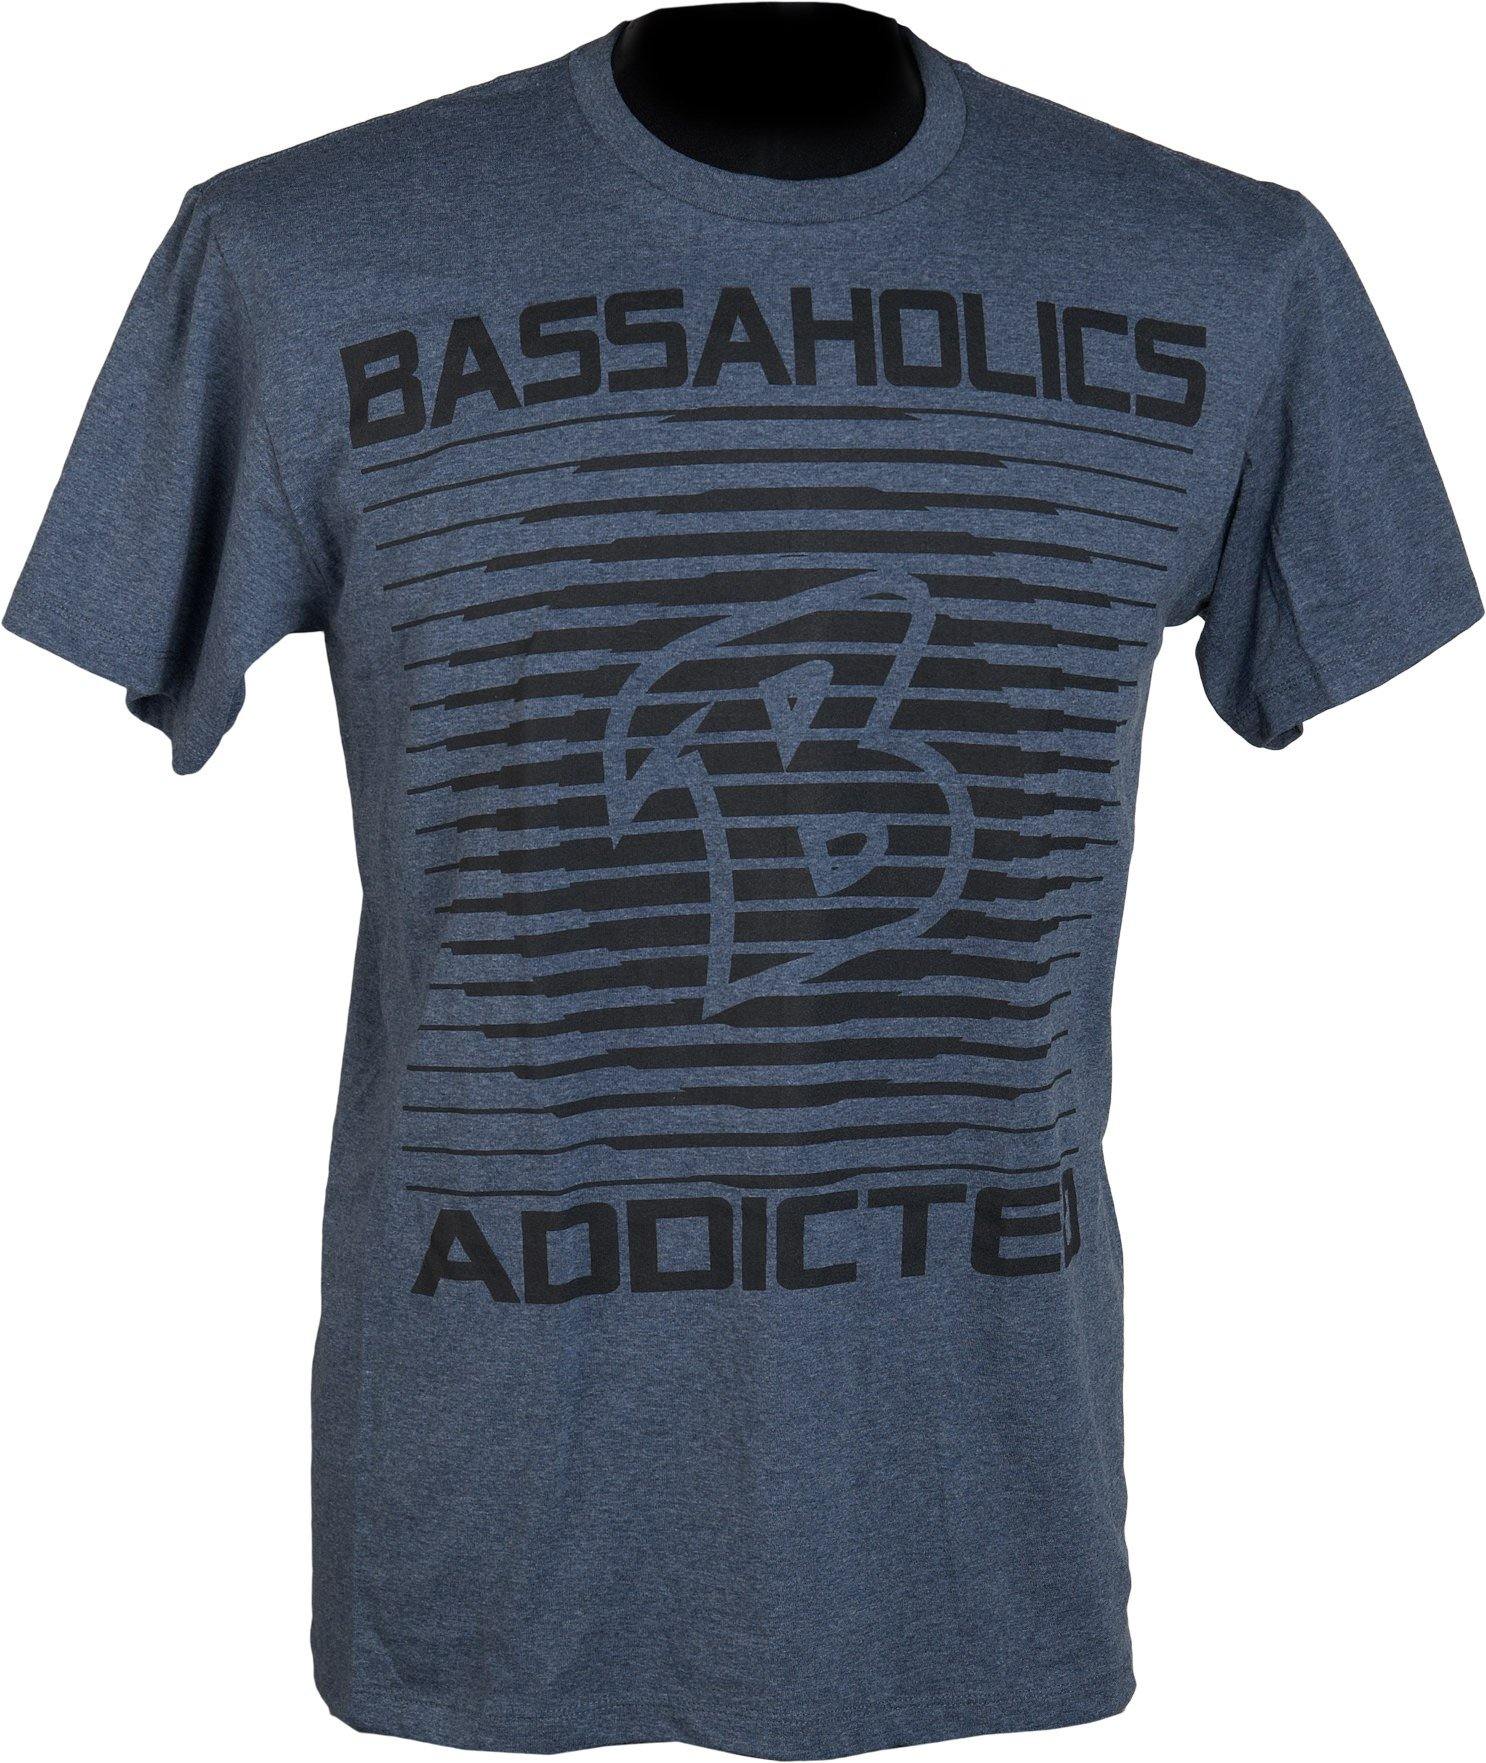 Solar Bass Fishing T-shirt – Bassaholics